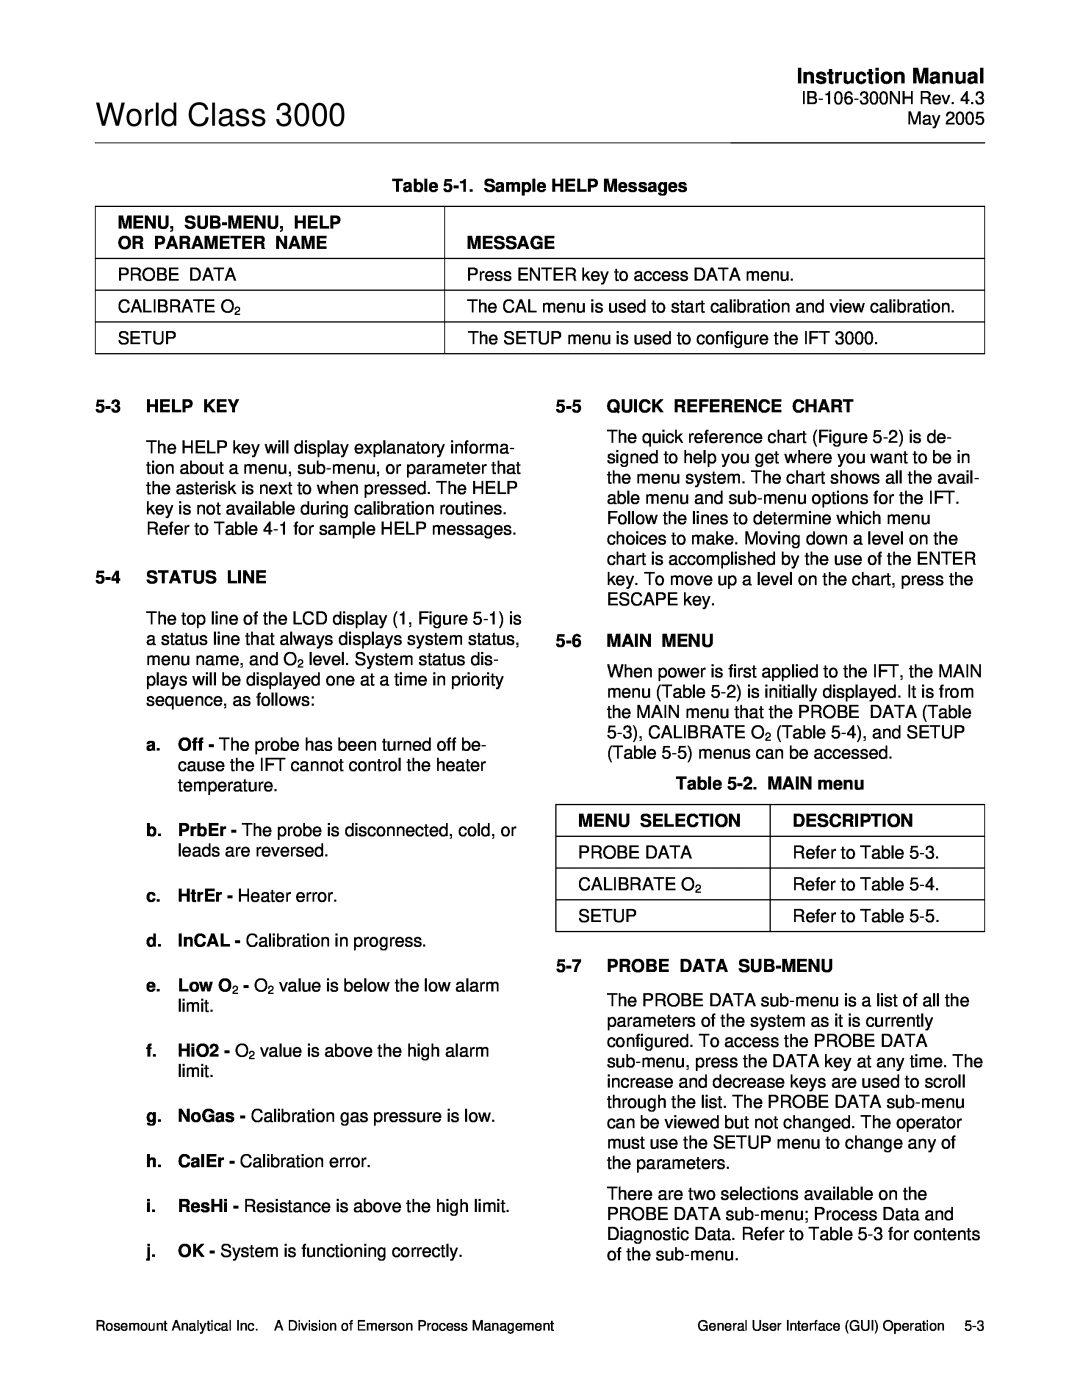 Emerson 3000 World Class, Instruction Manual, 1.Sample HELP Messages, Menu, Sub-Menu,Help, Or Parameter Name, Probe Data 